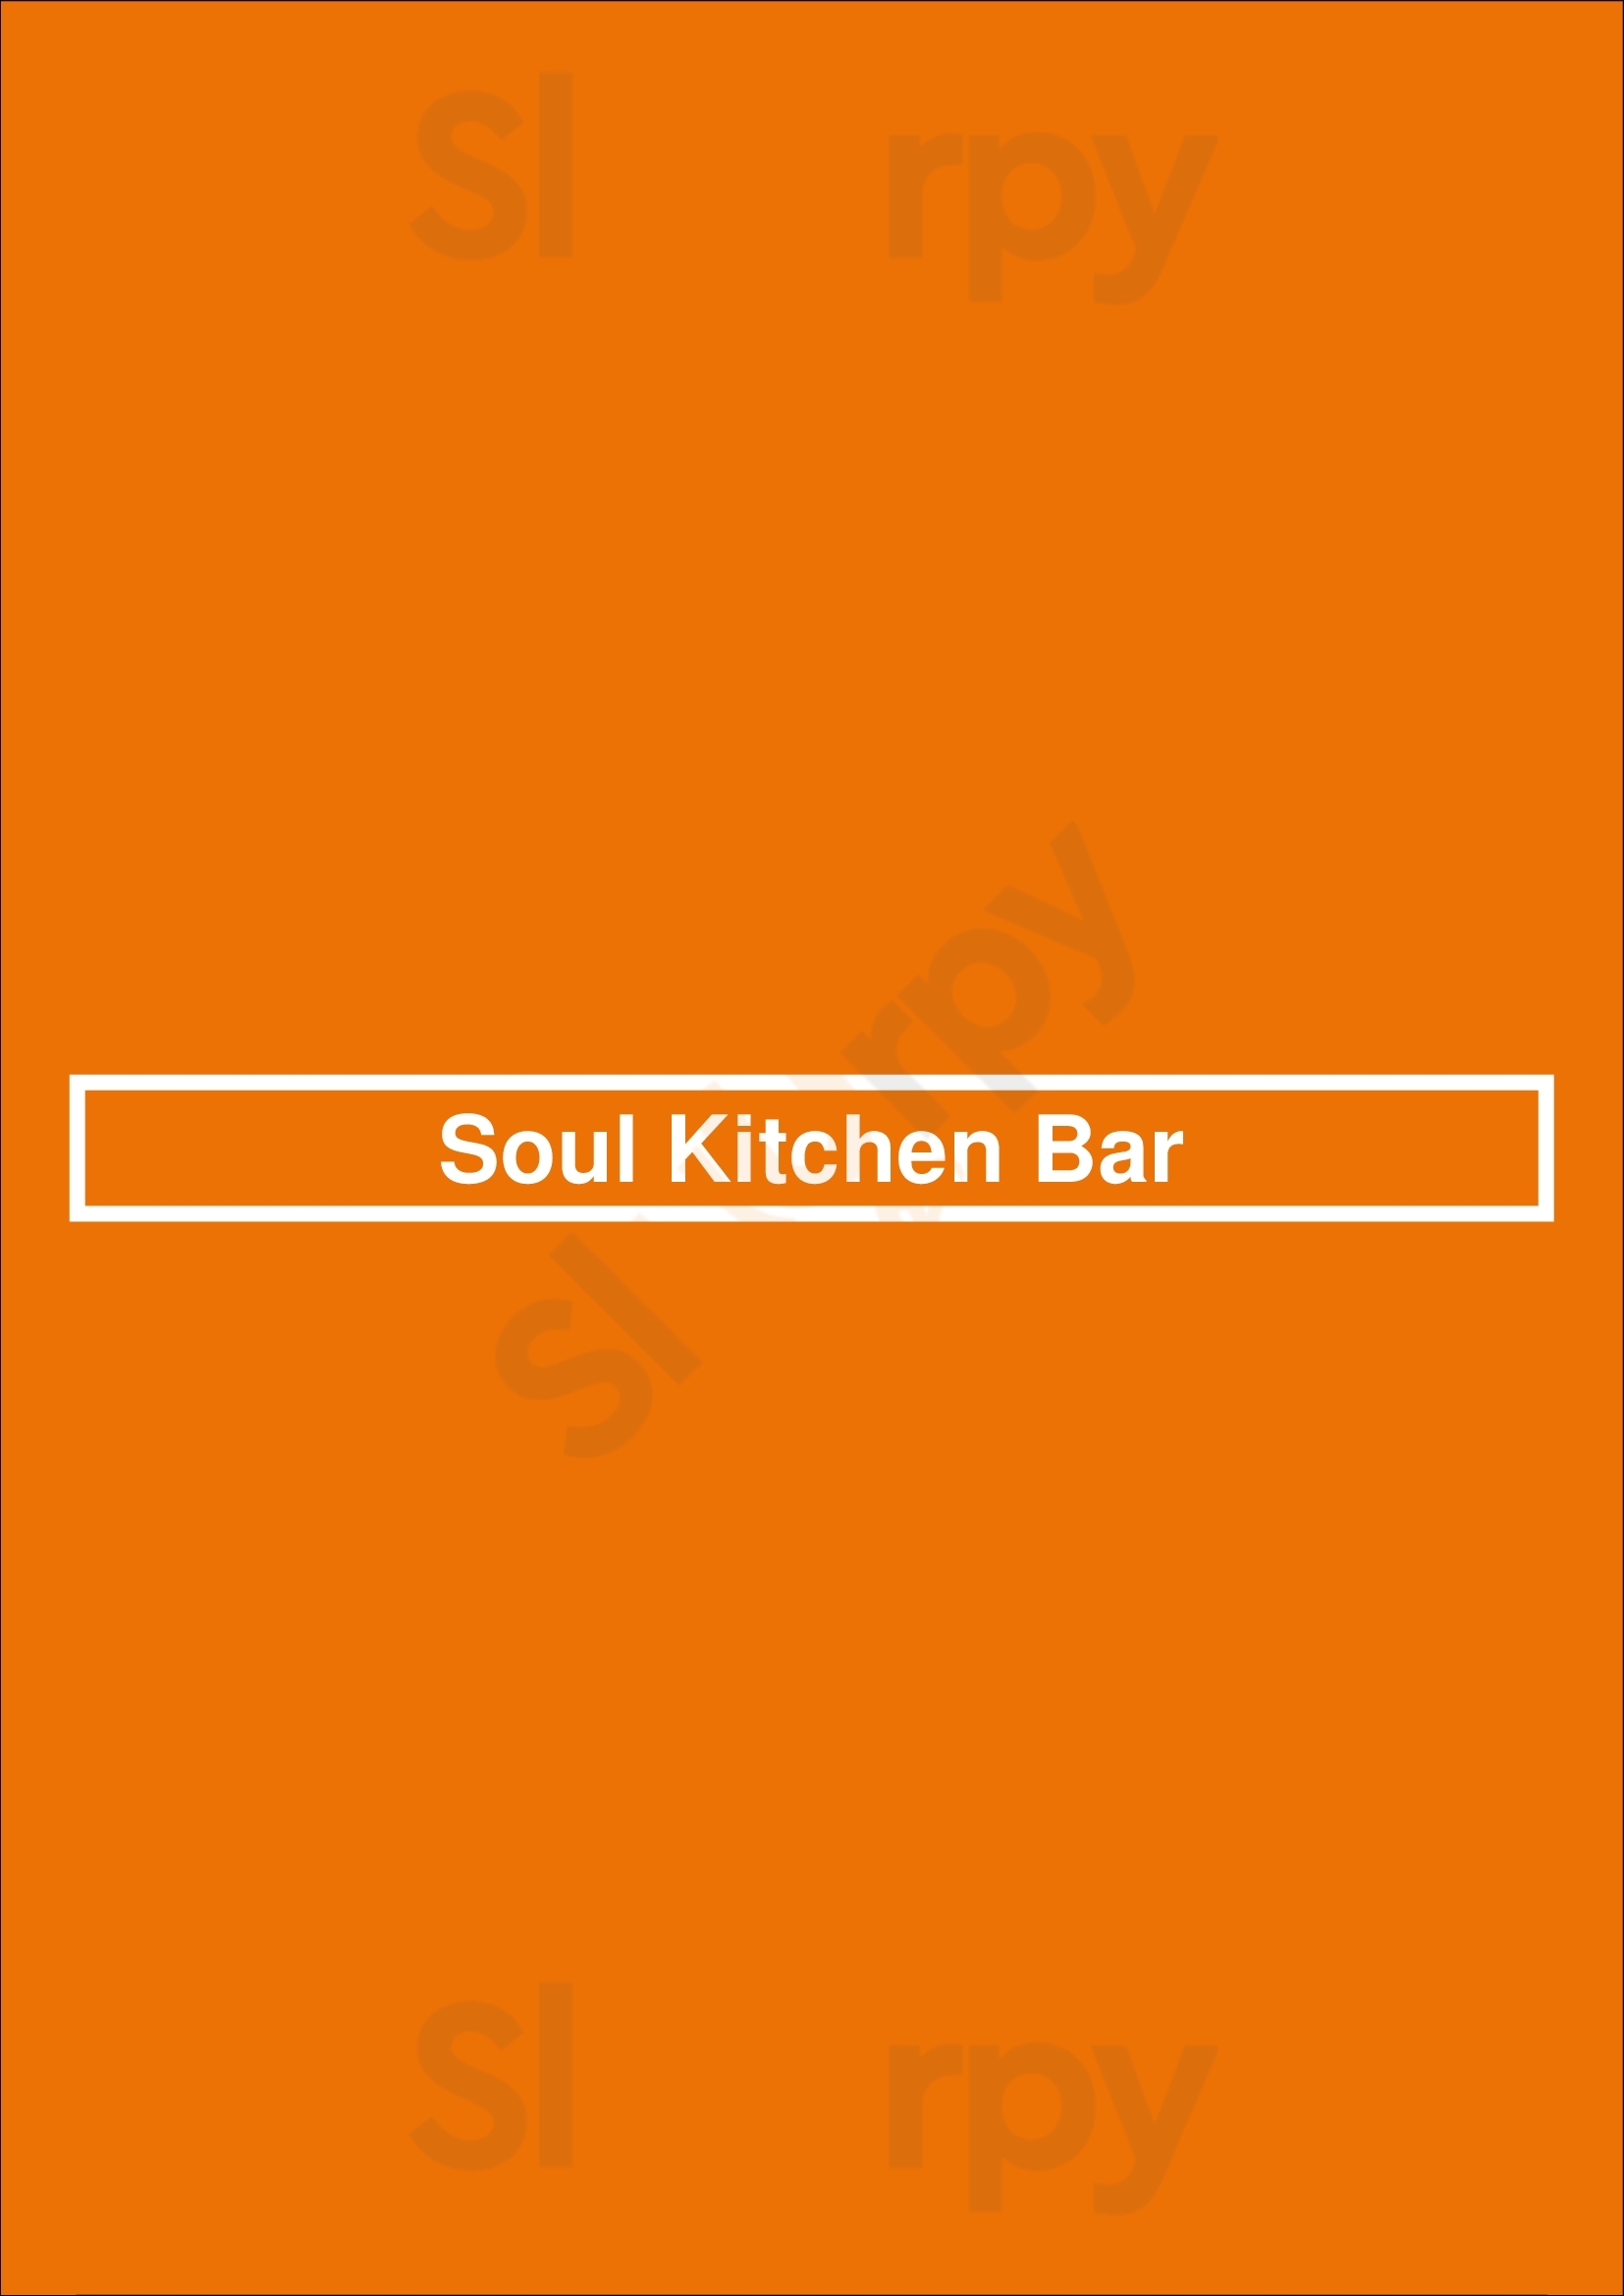 Soul Kitchen & Bar Lisboa Menu - 1